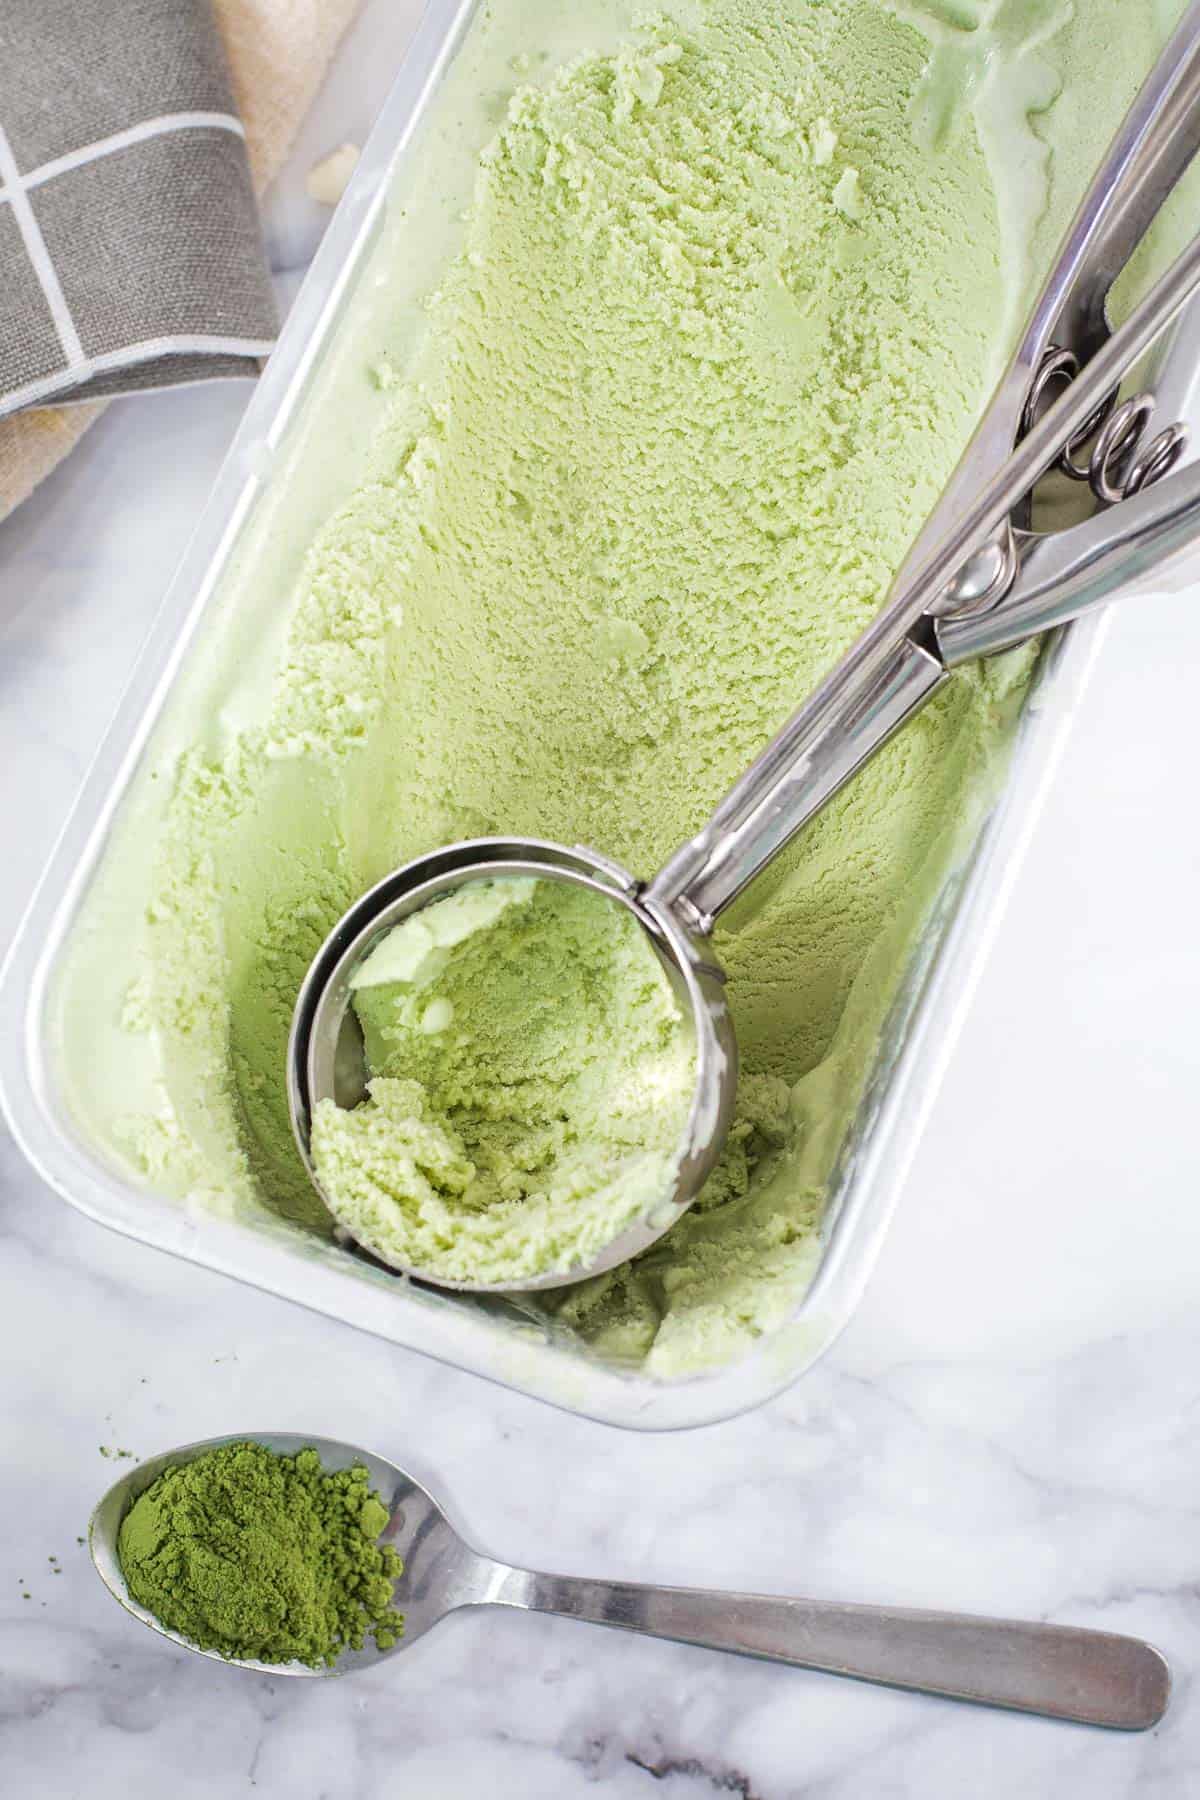 A ice cream scoop in a tub of green tea ice cream.